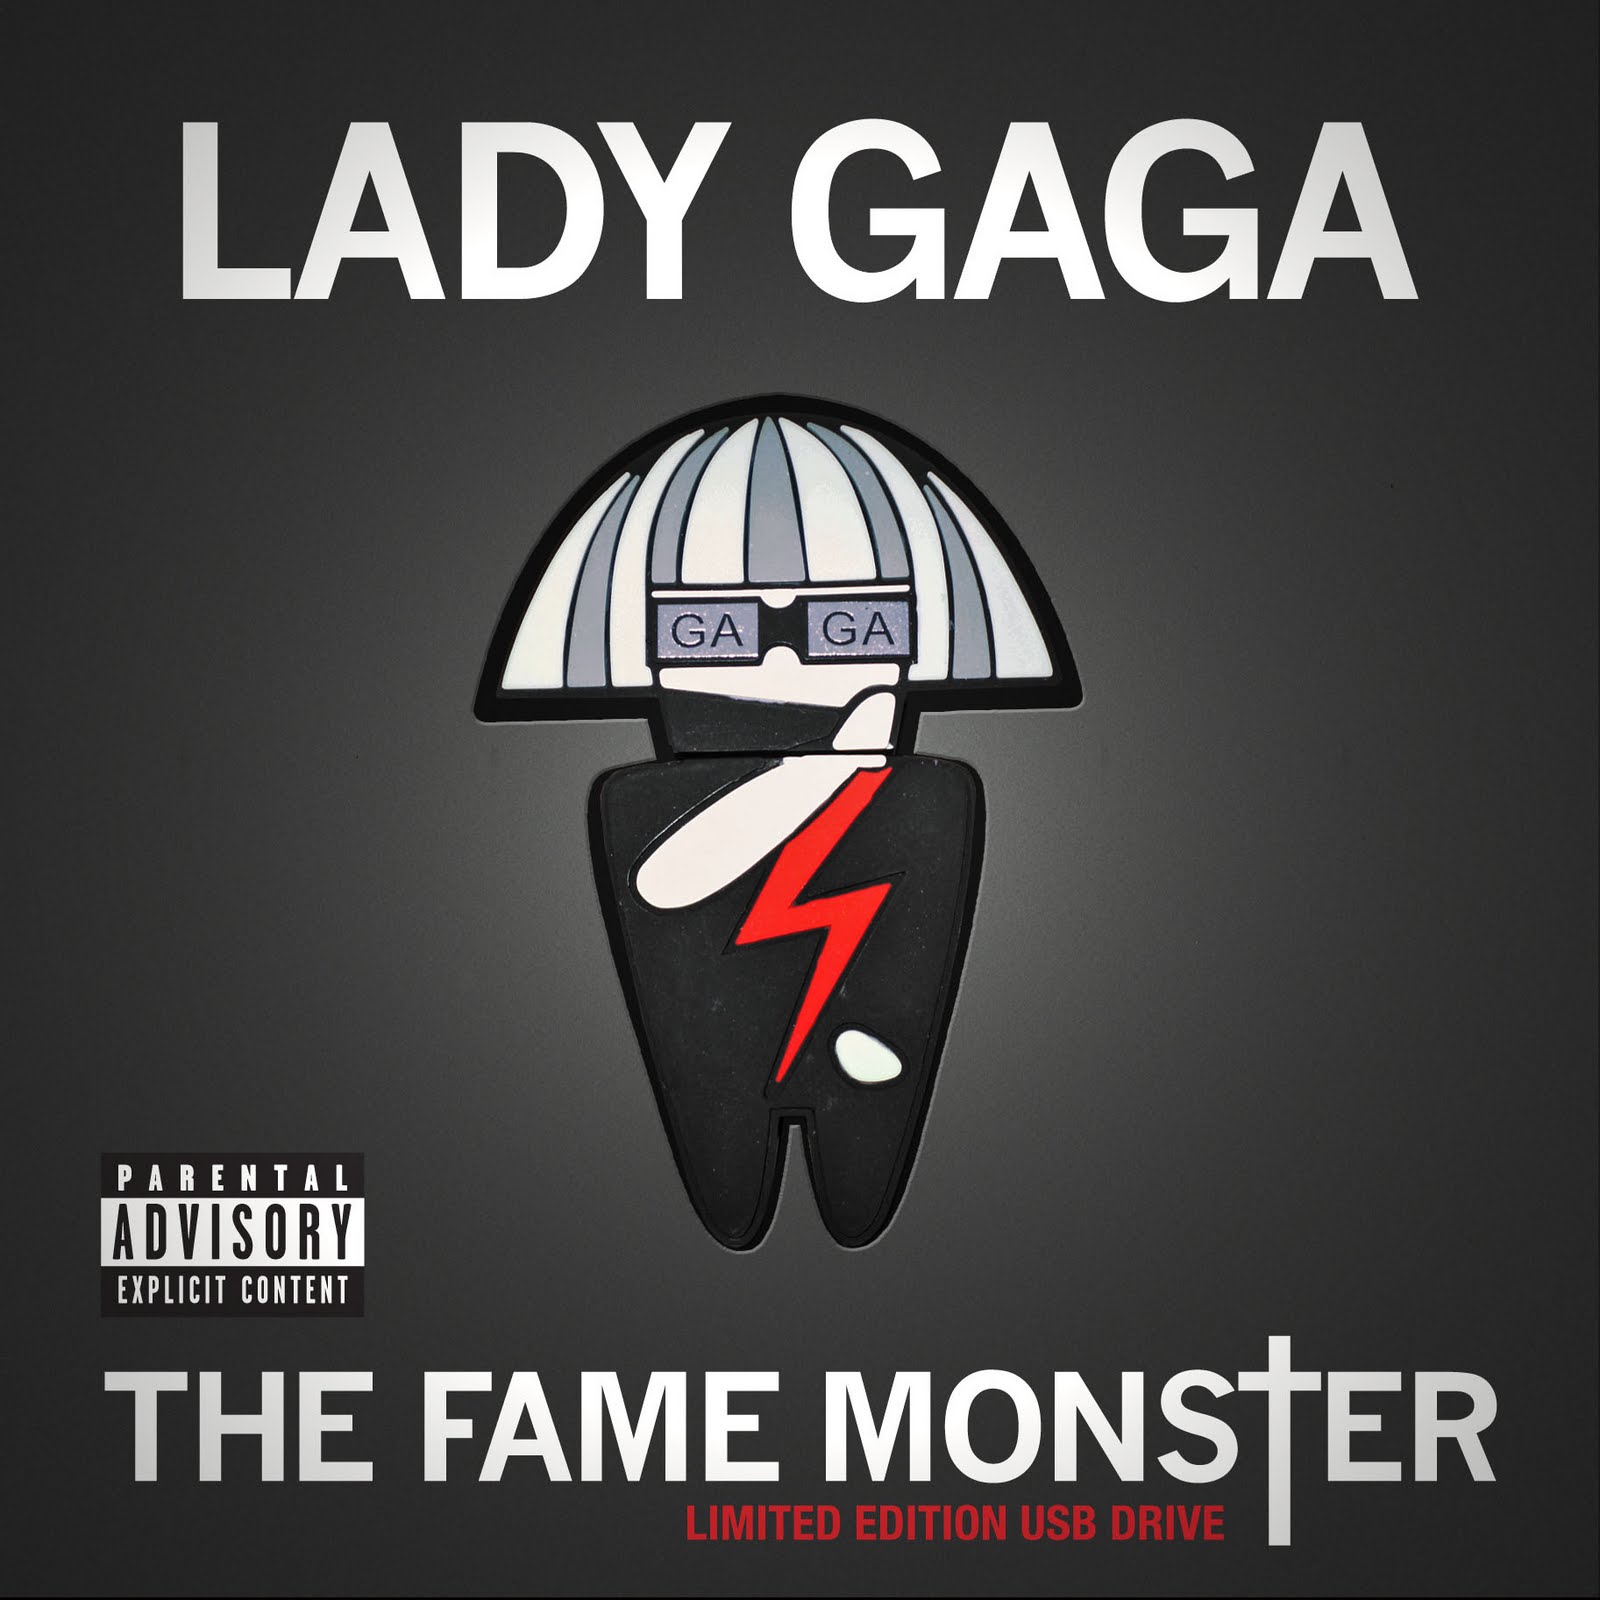 http://3.bp.blogspot.com/_gLvrRRLN7n0/S8hSvBfkqtI/AAAAAAAAQys/Y3UzCgKU2W4/s1600/Lady+Gaga+USB-omslag.jpg